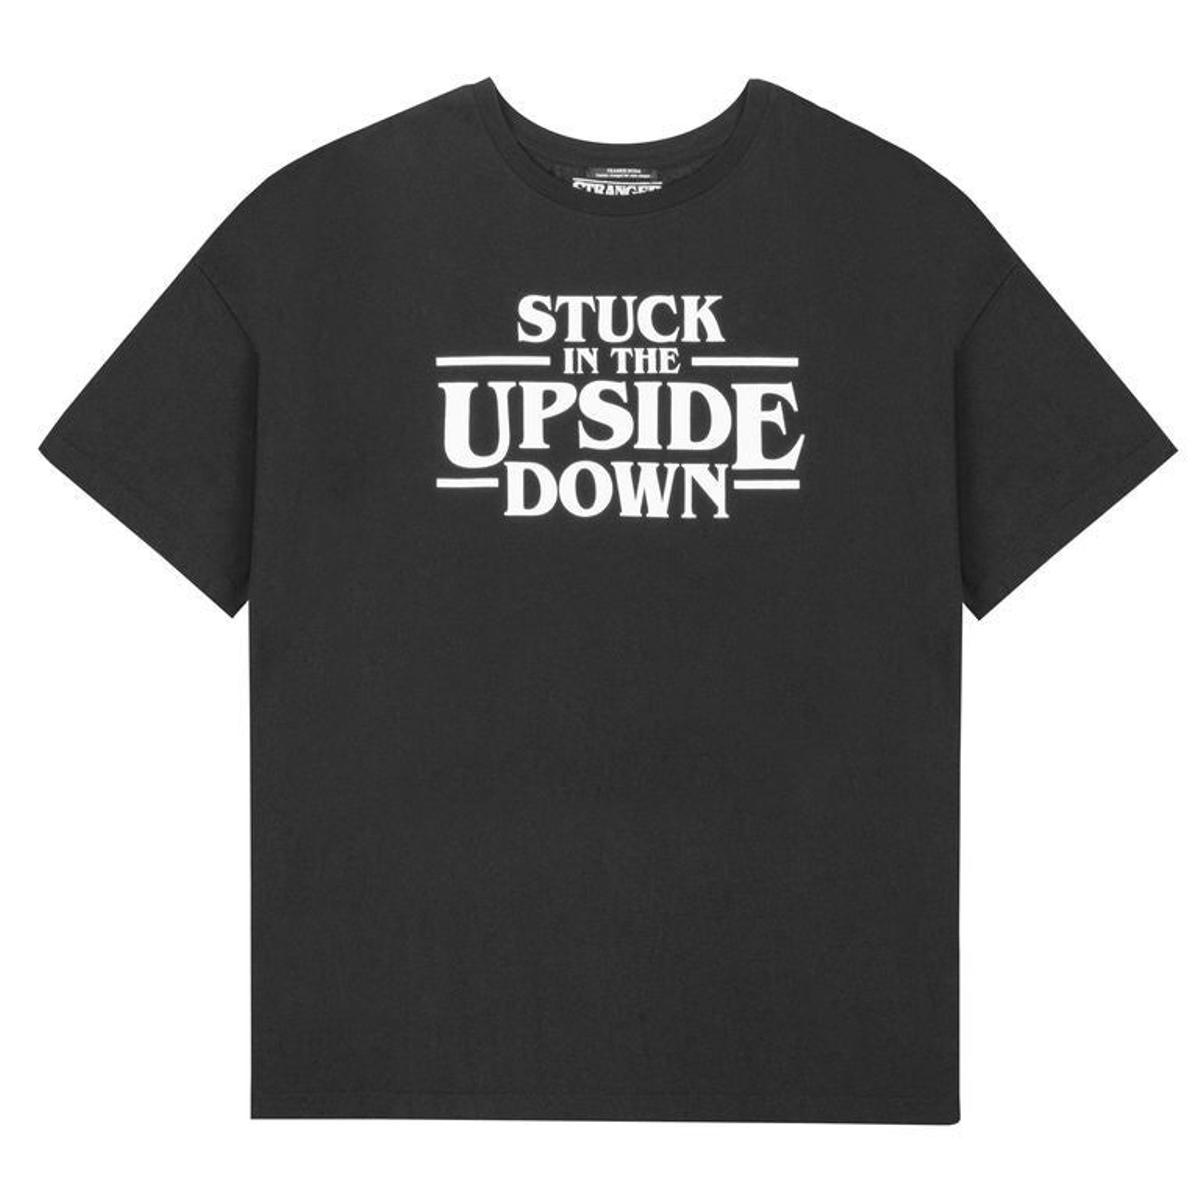 Camiseta negra 'Stuck in the Upside down' de 'Stranger things'.